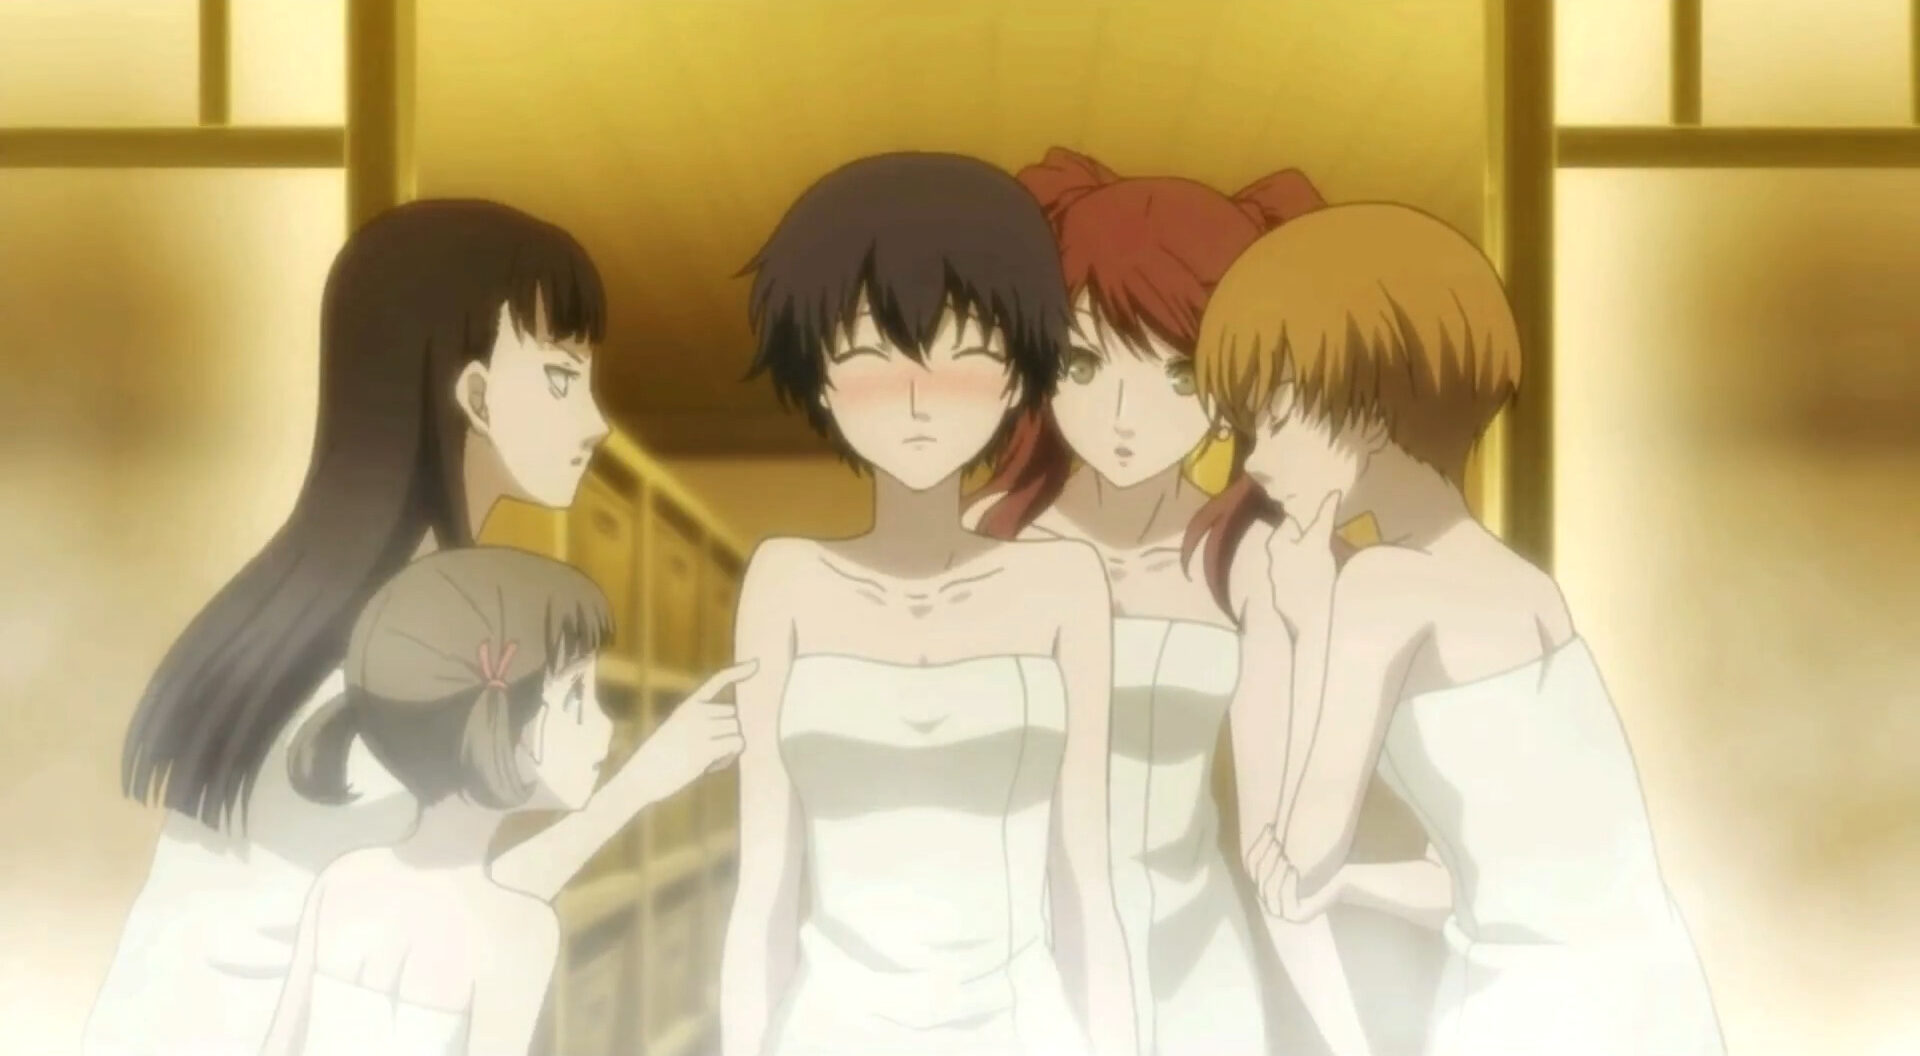 Chie Satonaka (Yui Horie), Rise Kujikawa (Rie Kugimiya), Yukiko Amagi (Ami Koshimizu) are surprised to see that Naoto Shirogane (Romi Park) has such a feminine body in Persona 4 Golden (2012), Atlus